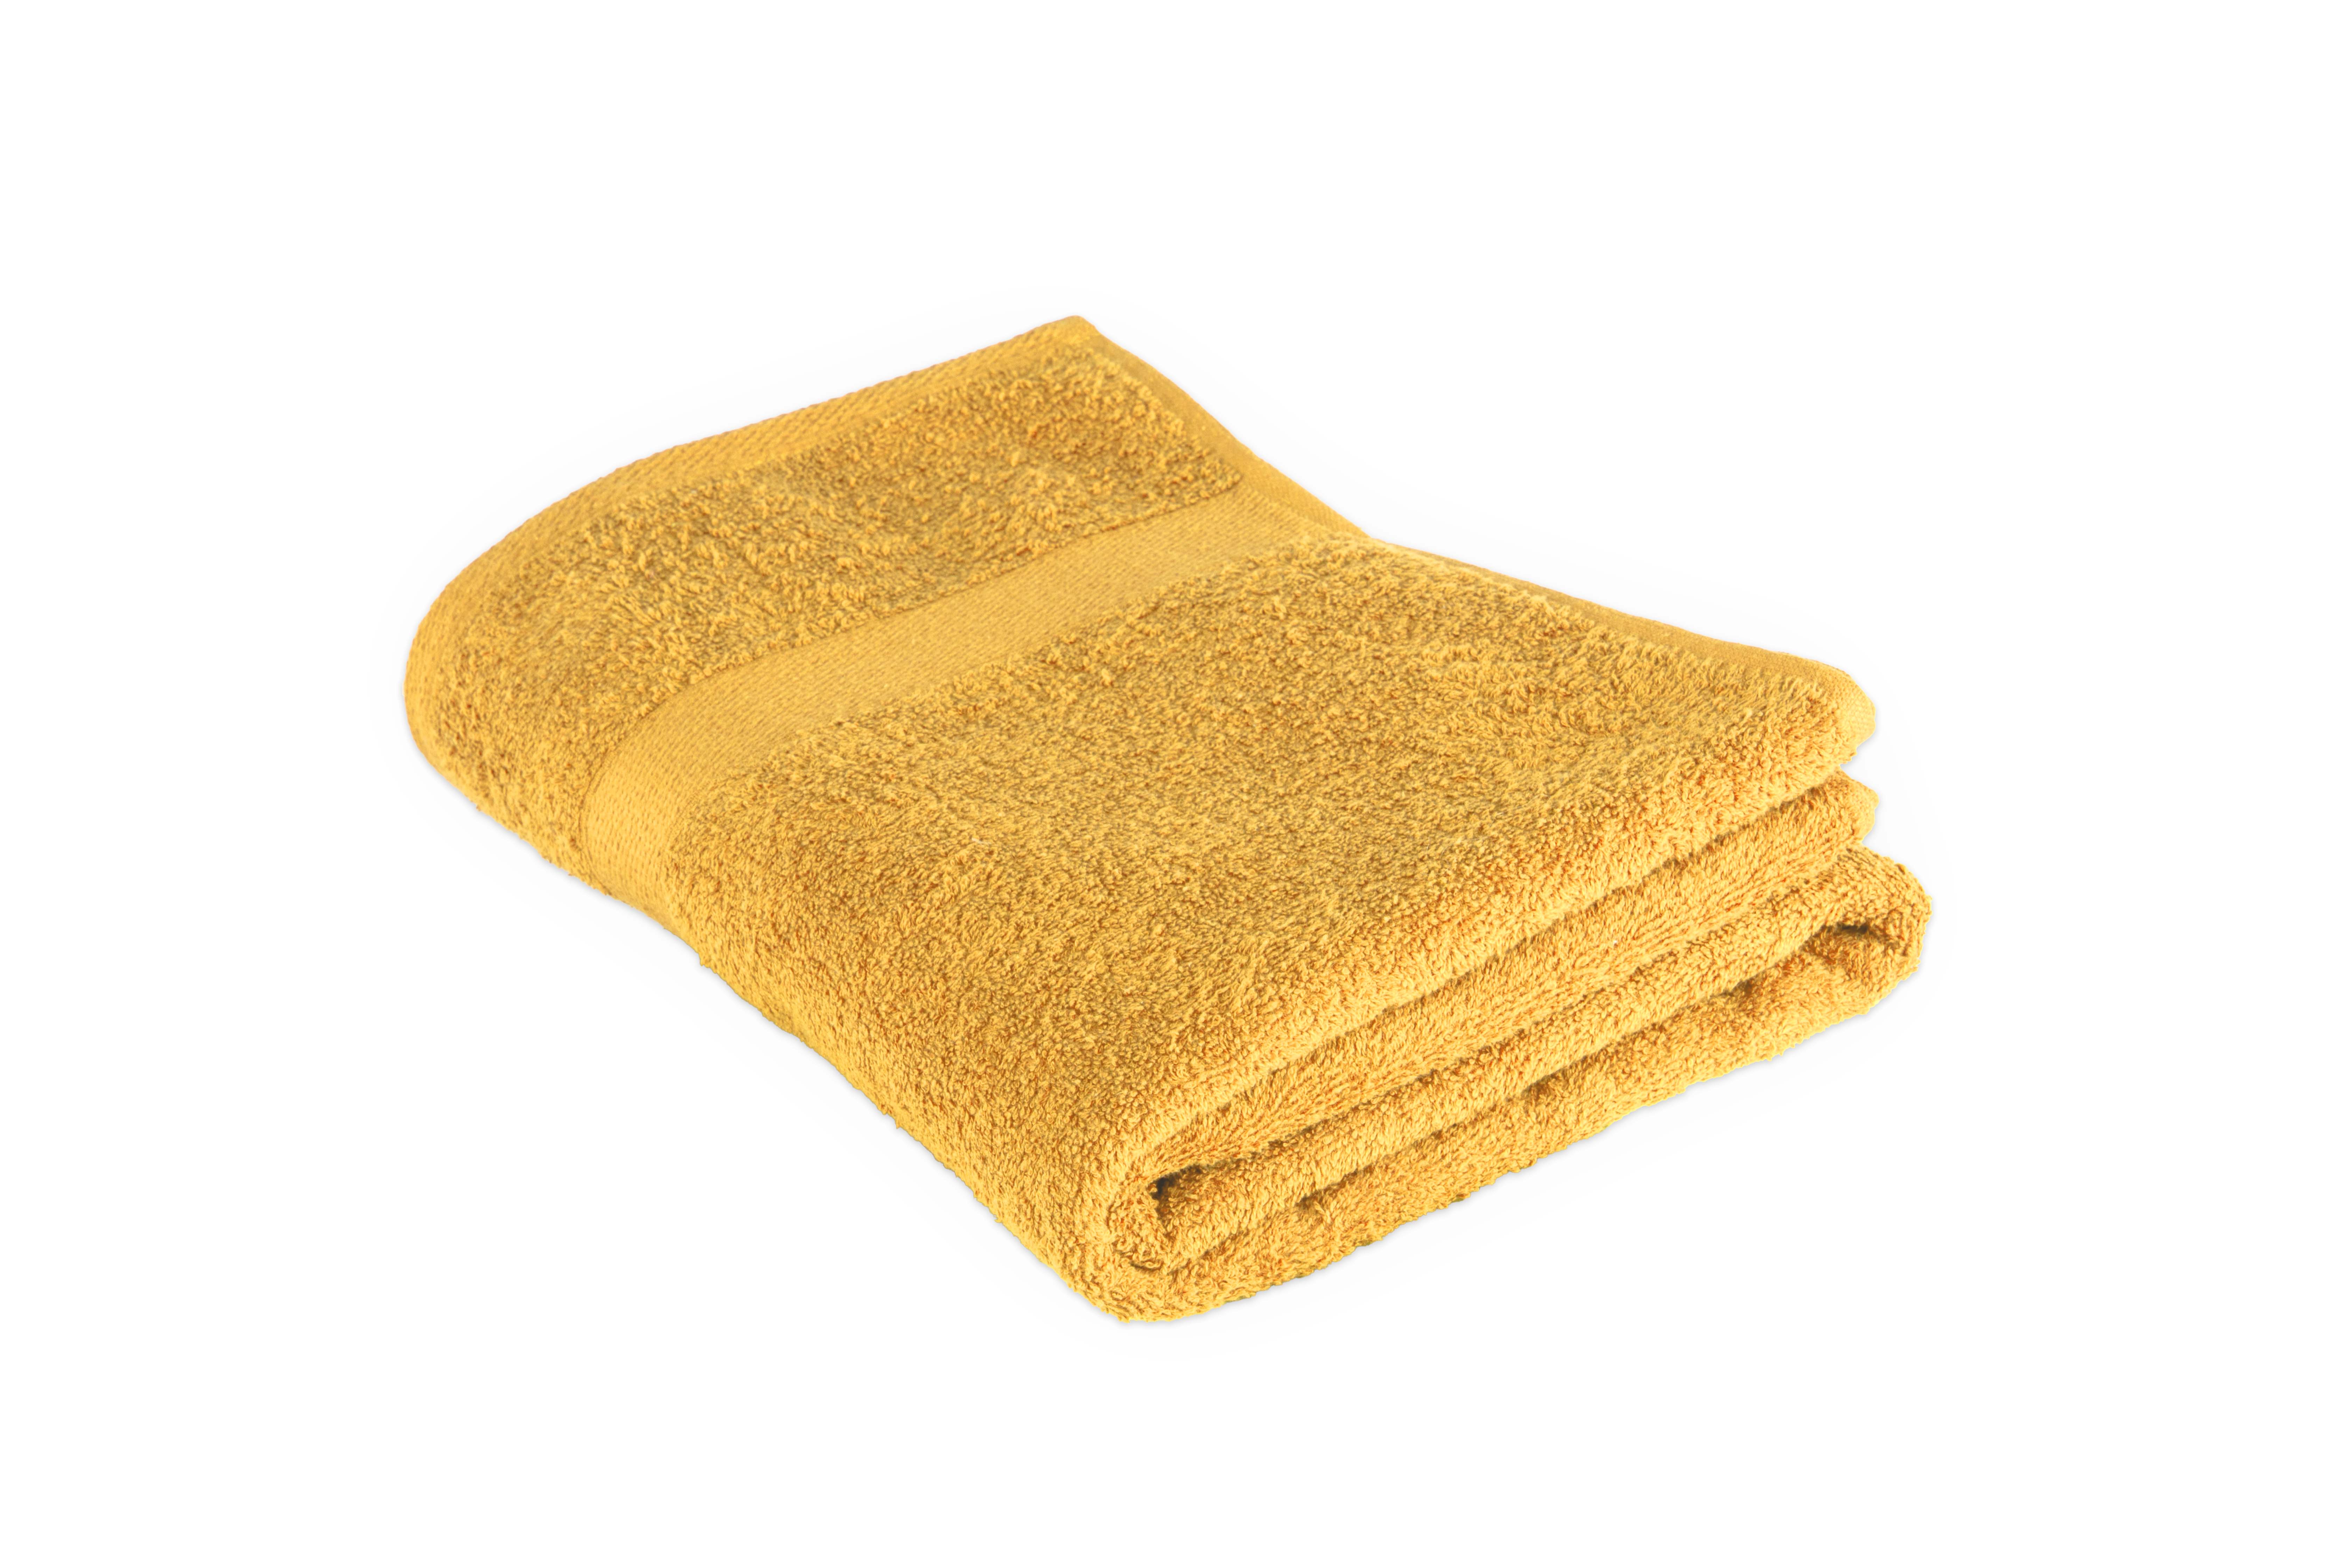 Shower towel 100x150cm, sunflower yellow